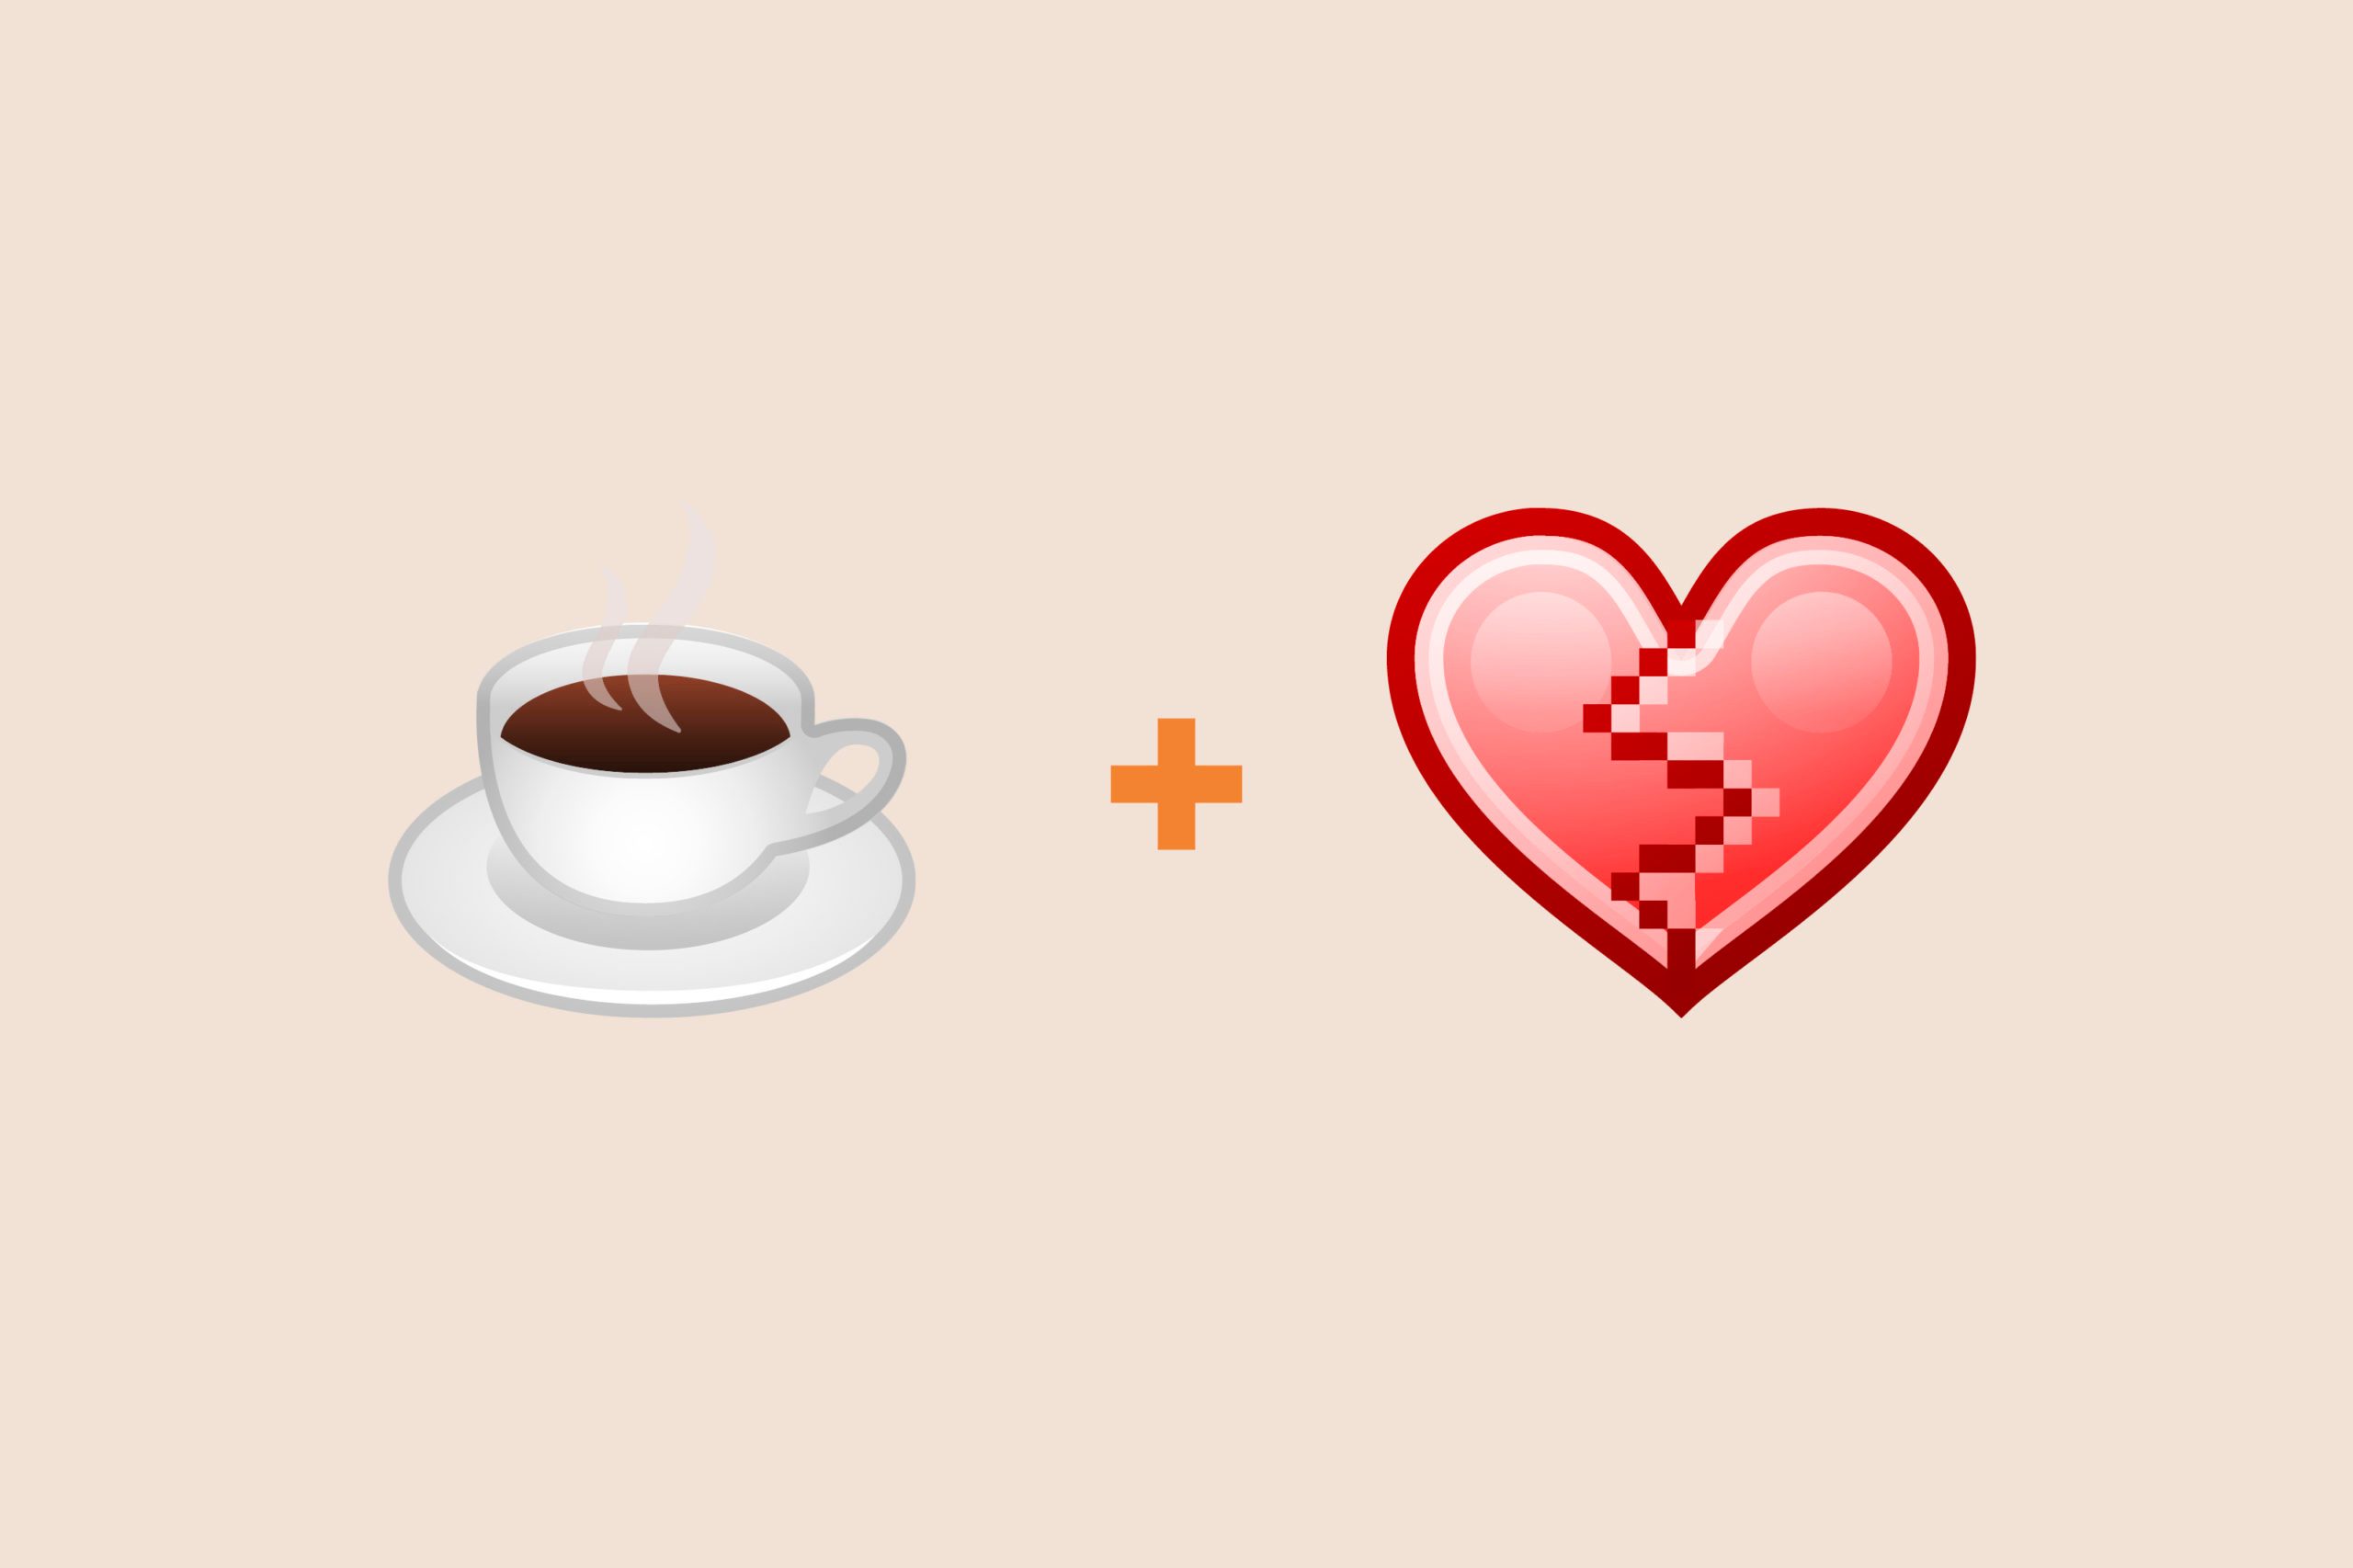 Coffee cup emoji + heartbreak emoji